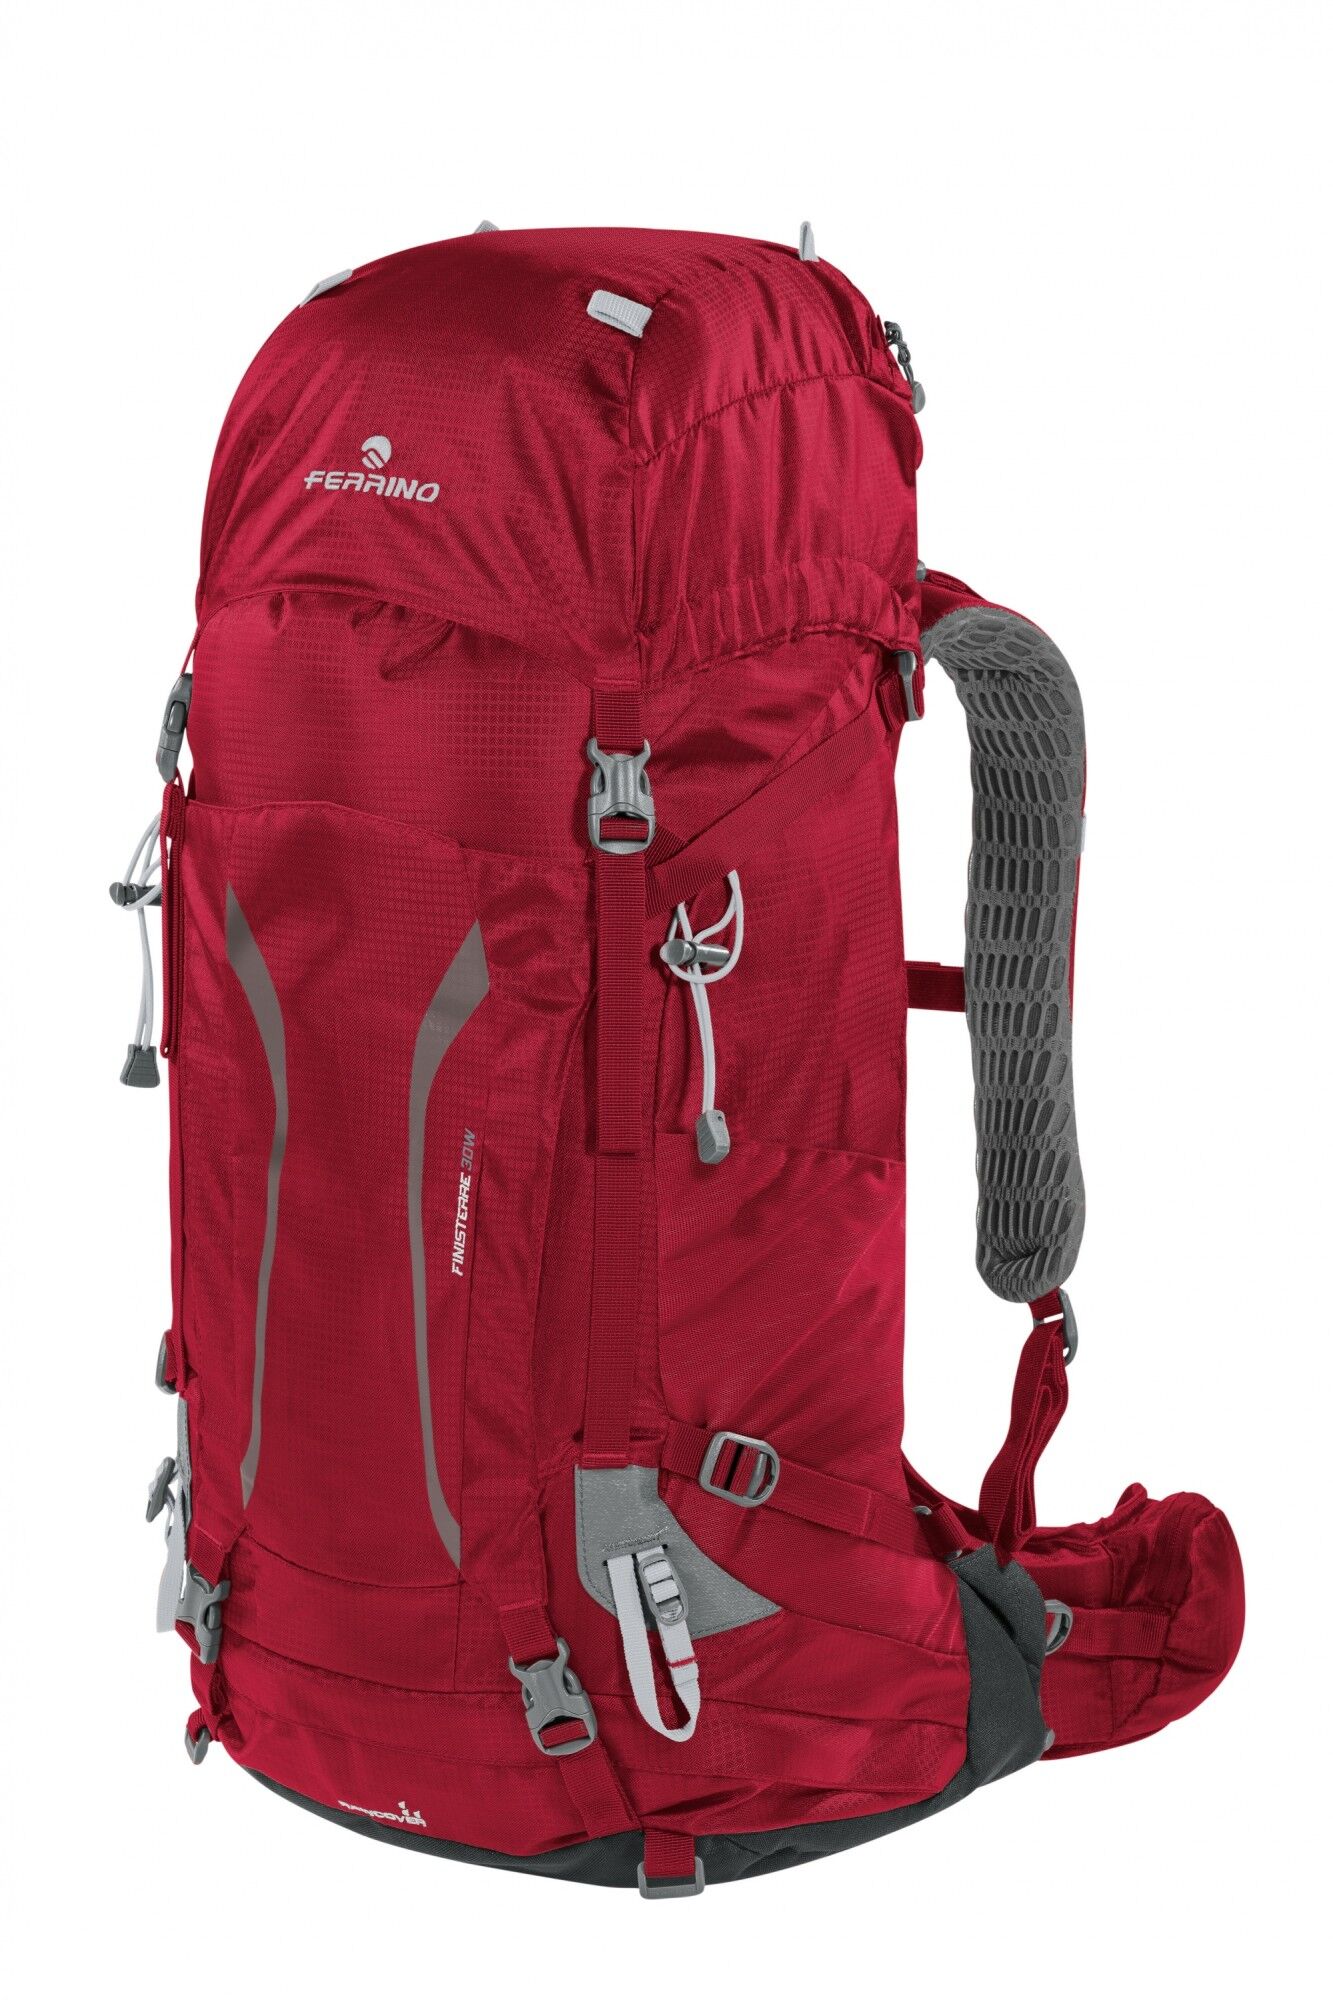 Ferrino Finisterre 30 Lady - Hiking backpack